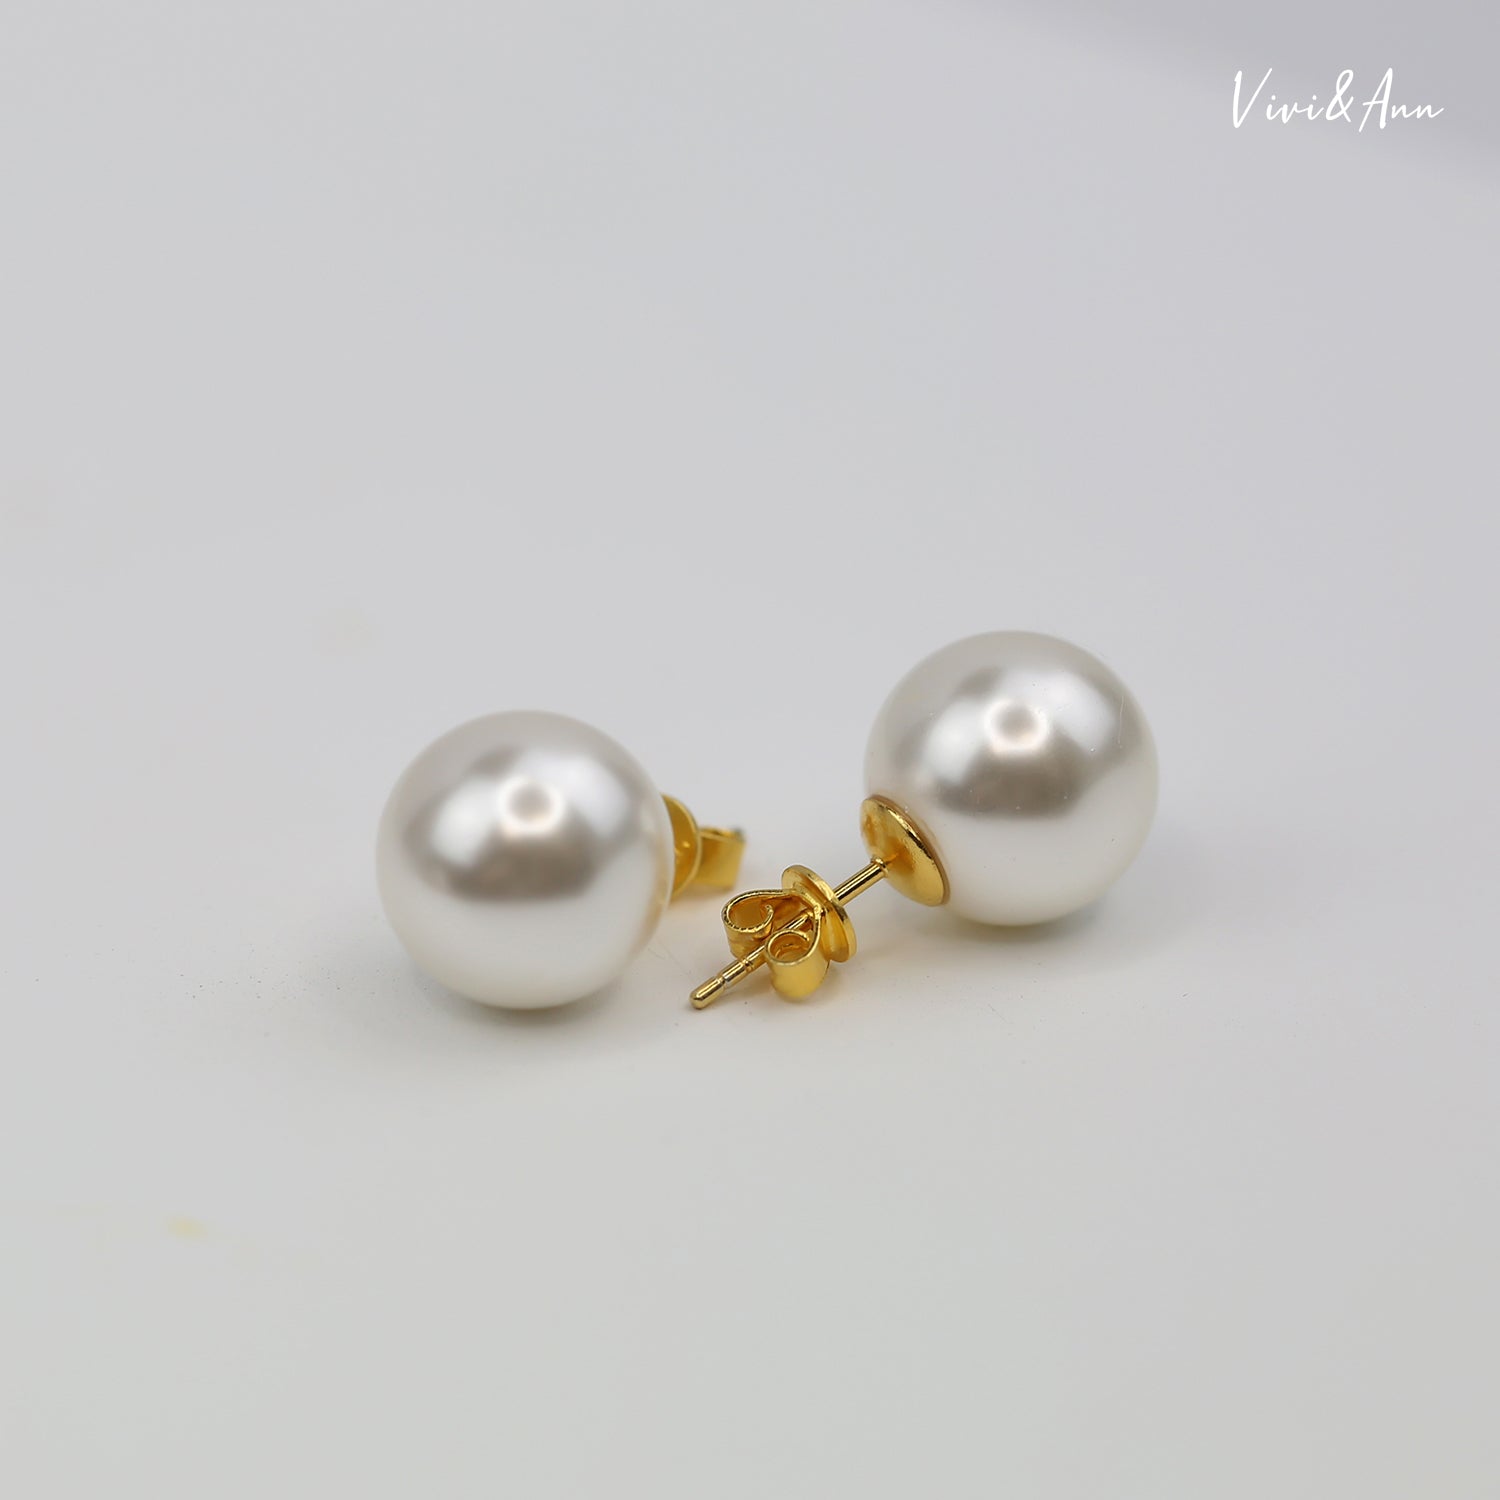 large shell pearl earrings